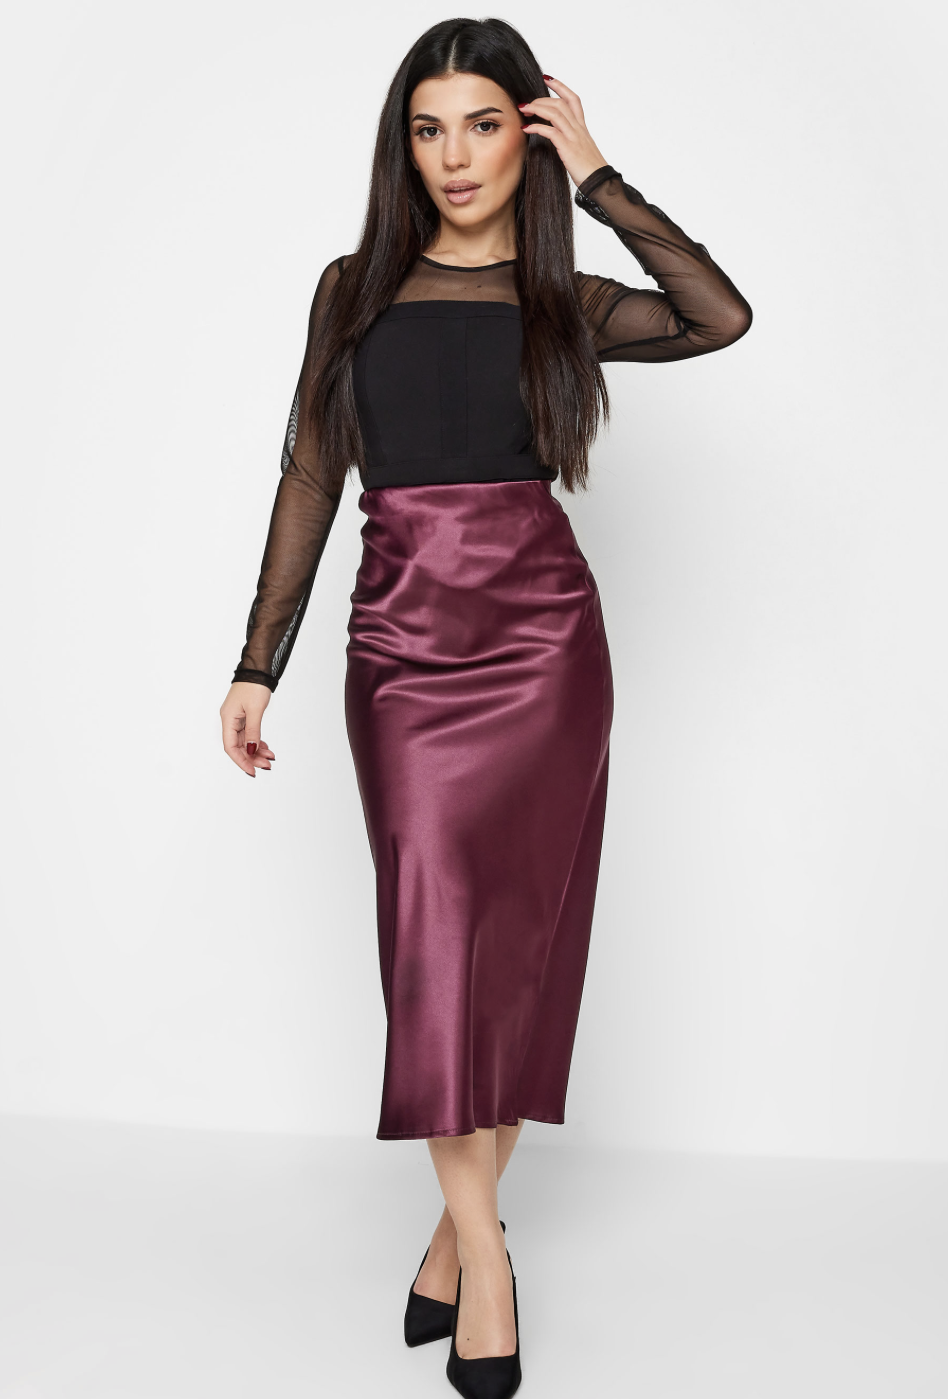 This Morning: November 2020 Holly Willoughby's Burgundy Satin Asymmetric  Midi Skirt | Shop Your TV